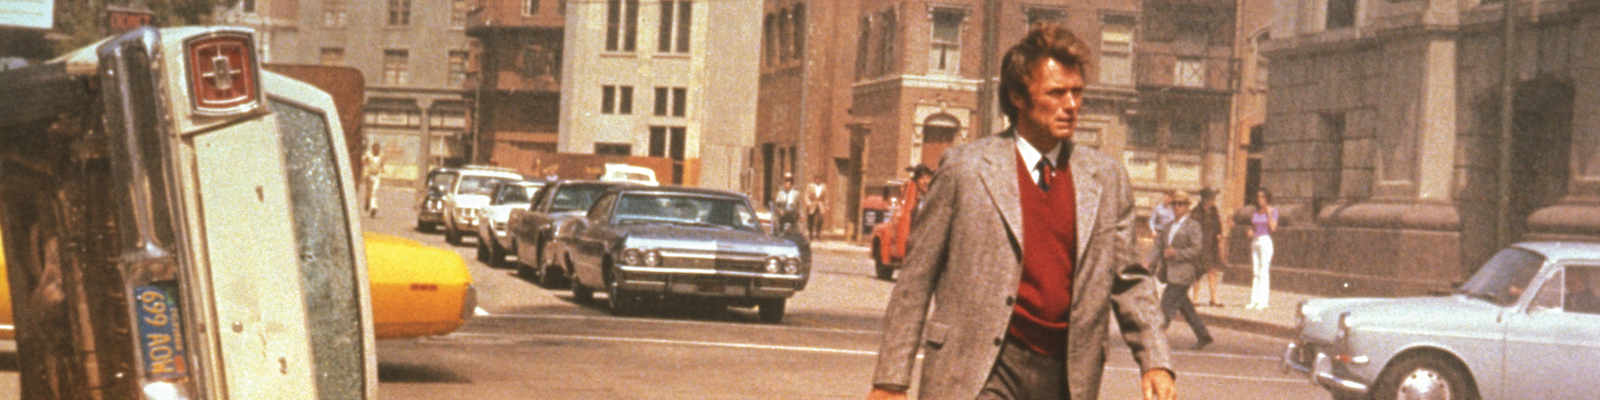 Clint Eastwood holding a gun walks down a street beside a car flipped on its side in Dirty Harry